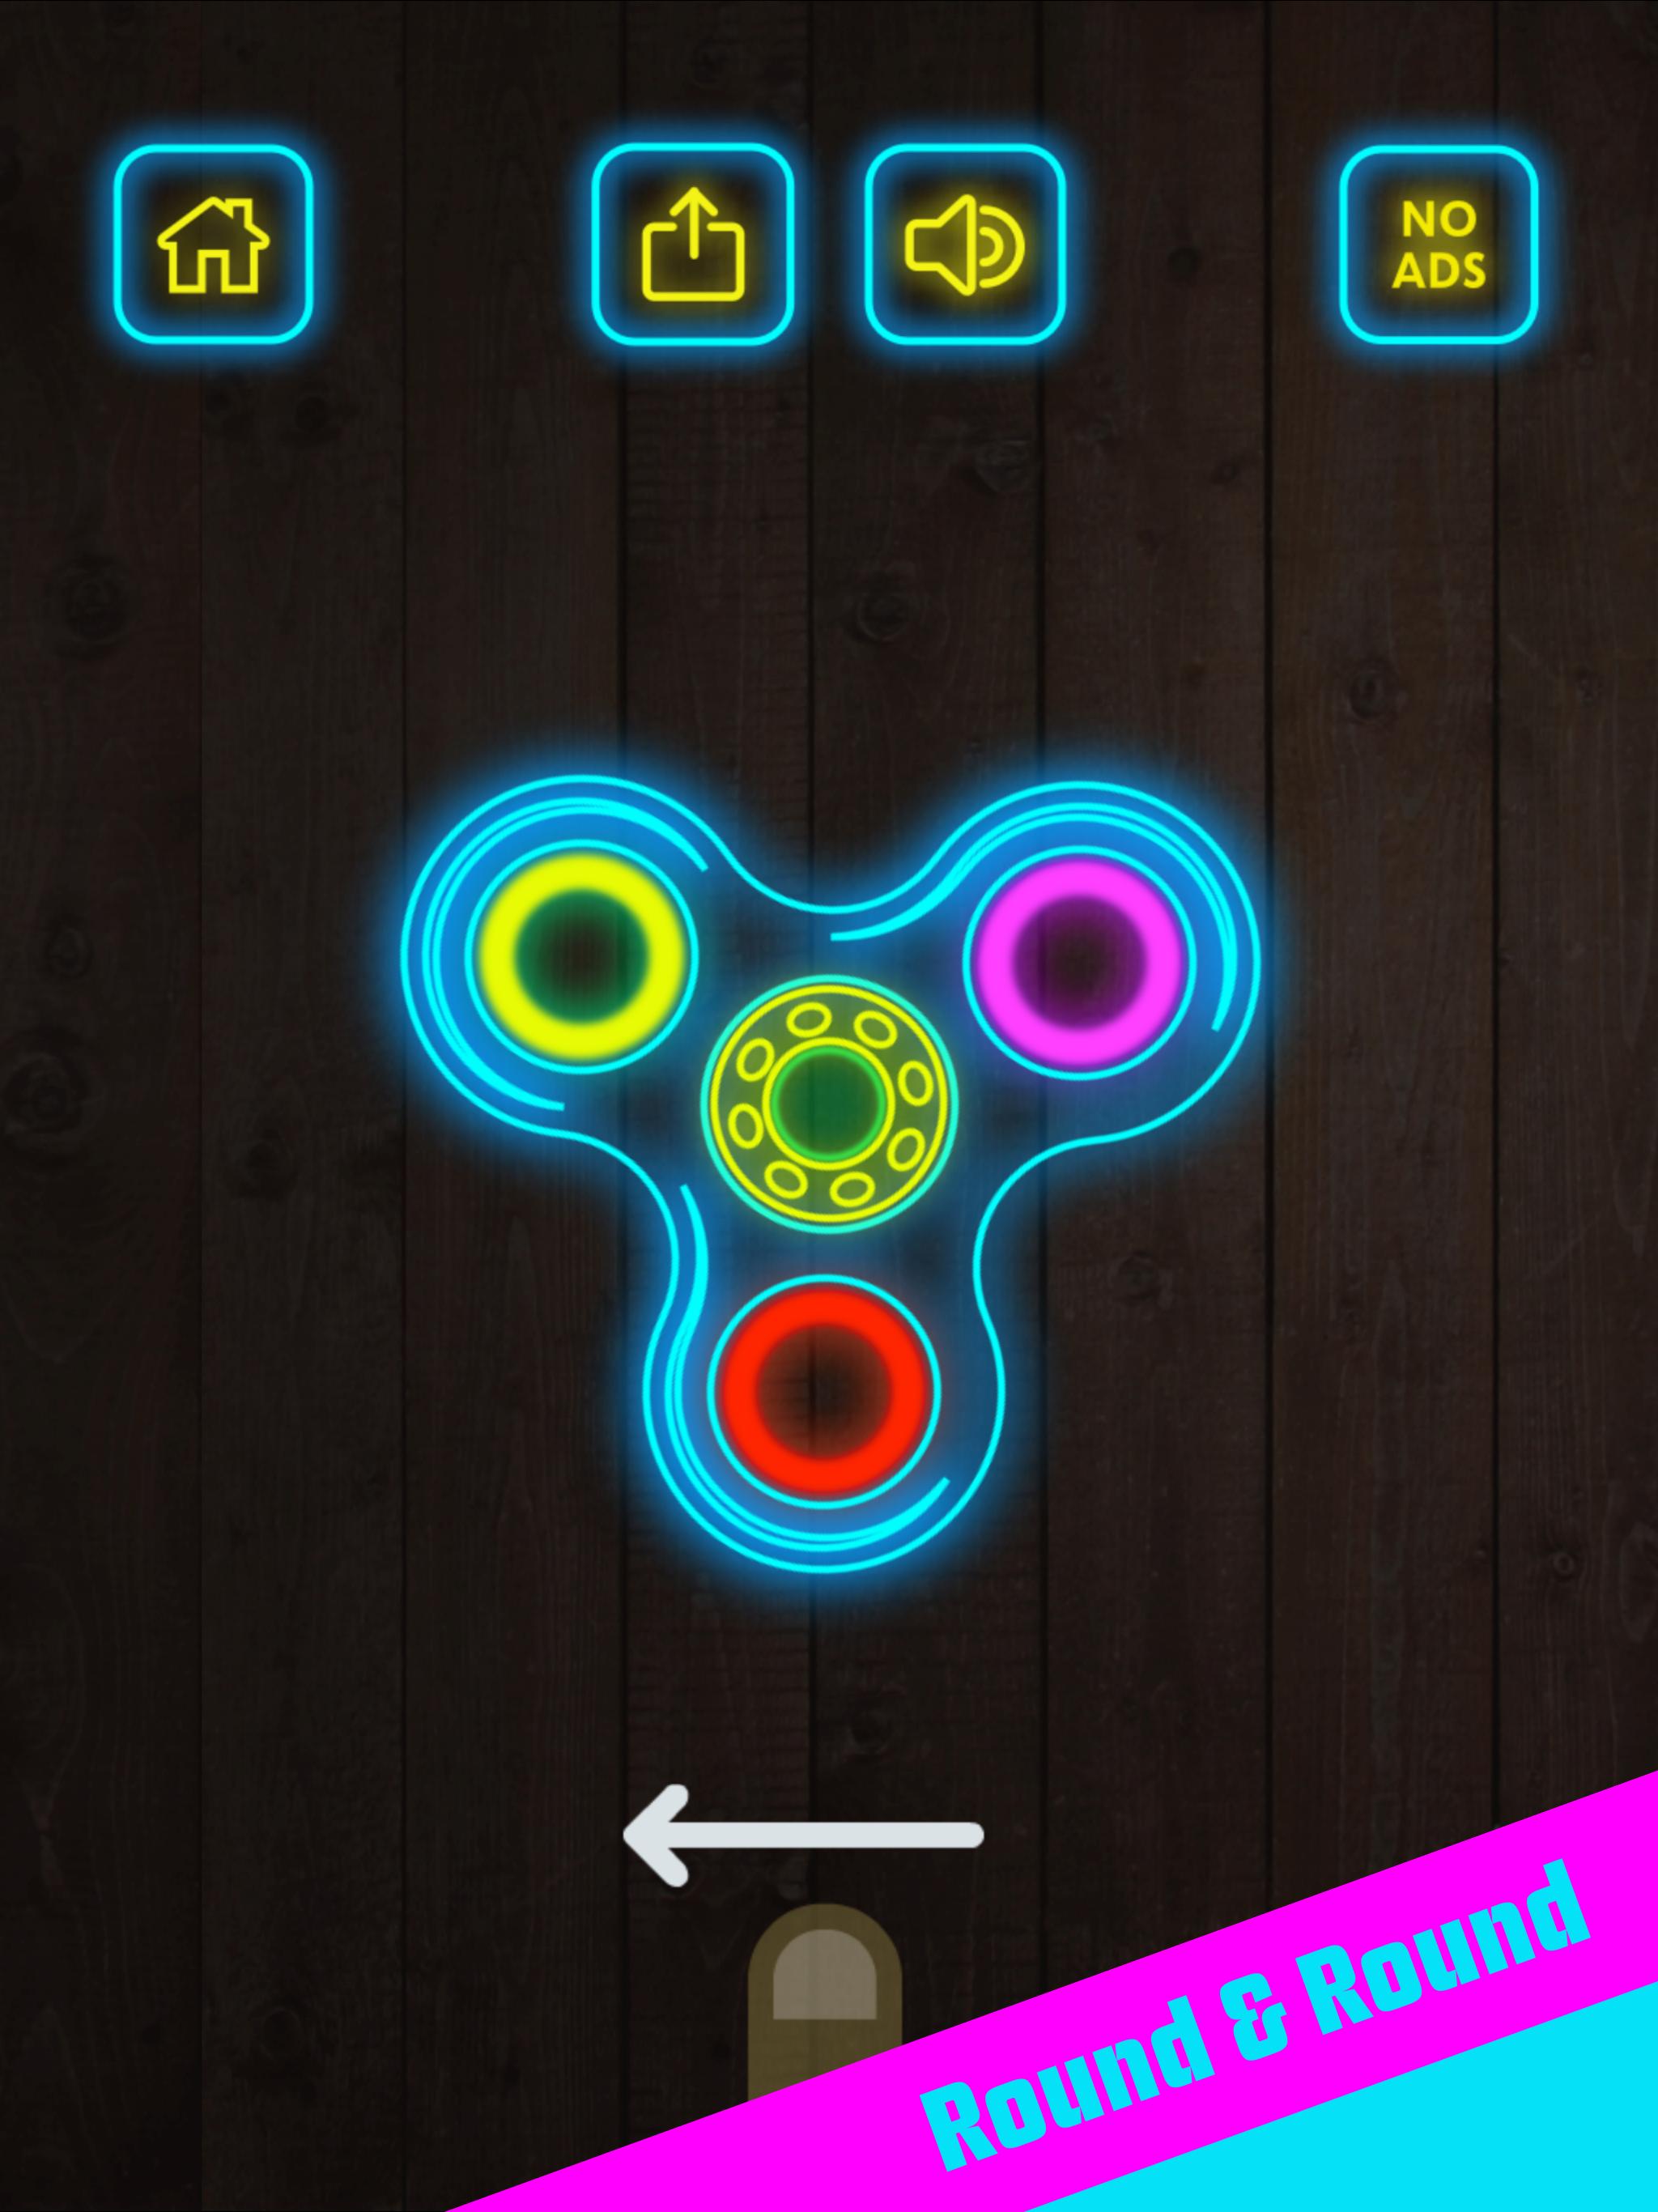 Extra spin. Color Rings игра. Color Puzzle игра. Игра головоломка. Android головоломка кольца.